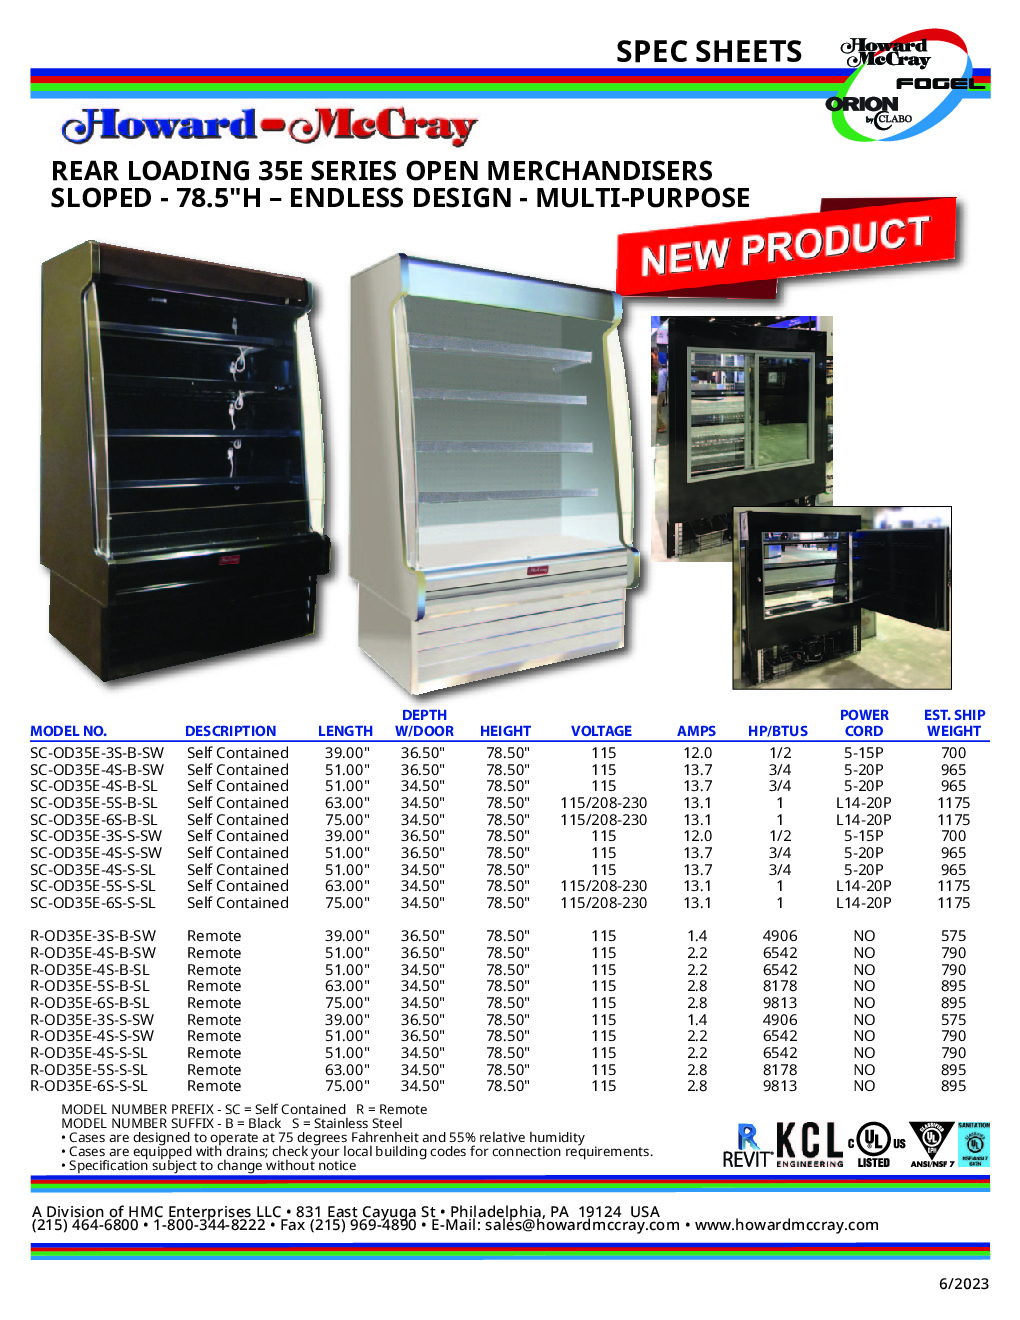 Howard-McCray R-OD35E-3S-B-SW Open Refrigerated Display Merchandiser